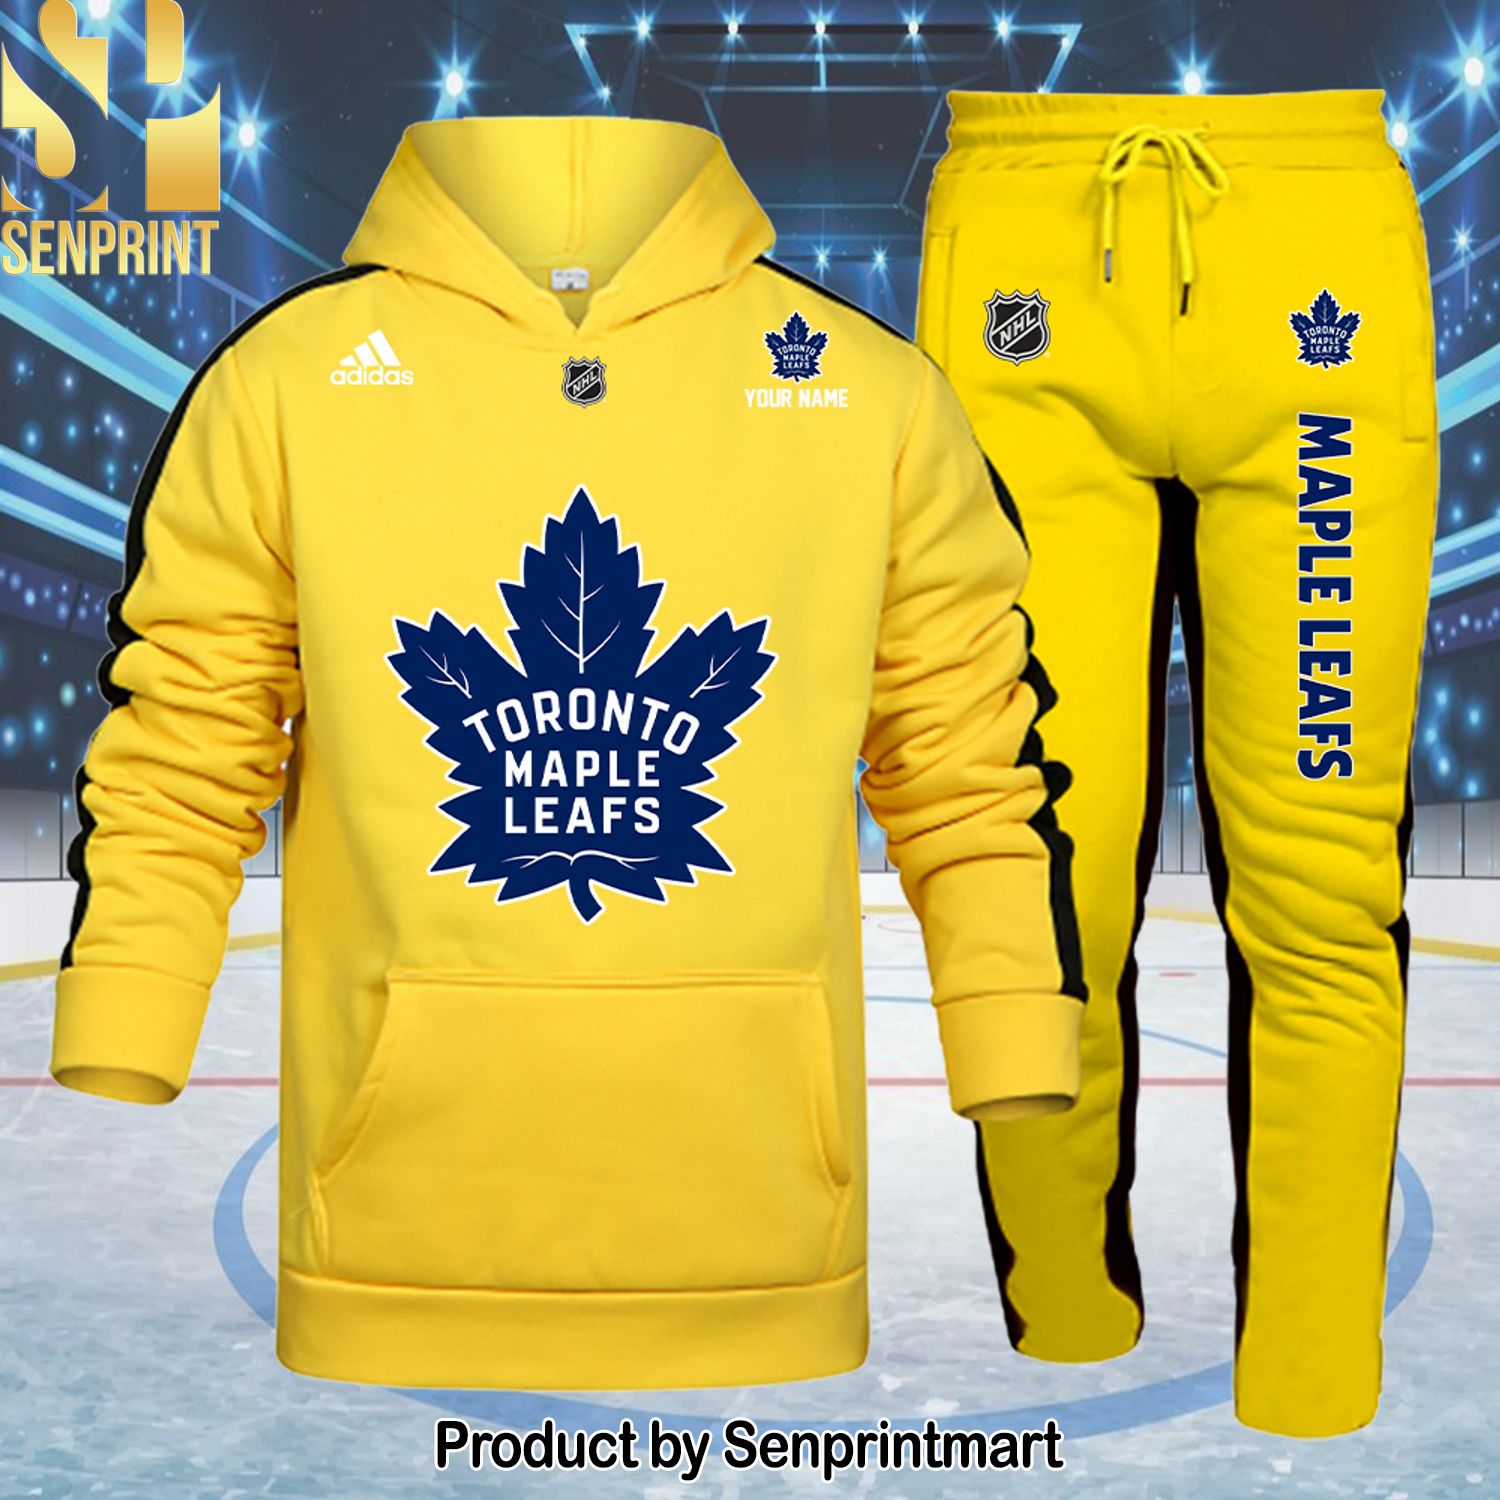 Toronto Maple Leafs New Fashion Shirt and Pants